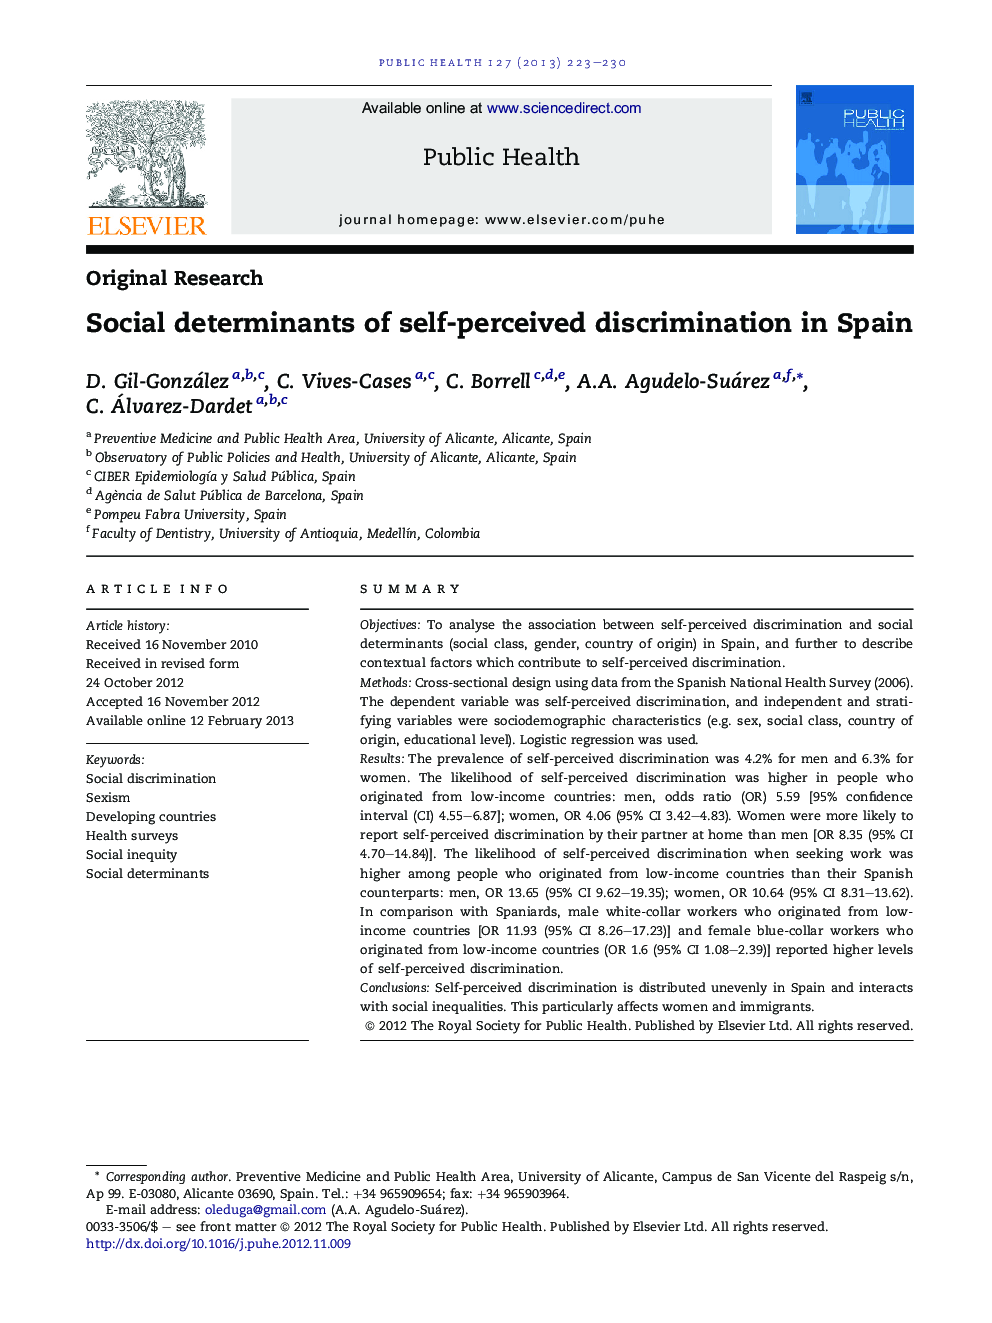 Social determinants of self-perceived discrimination in Spain